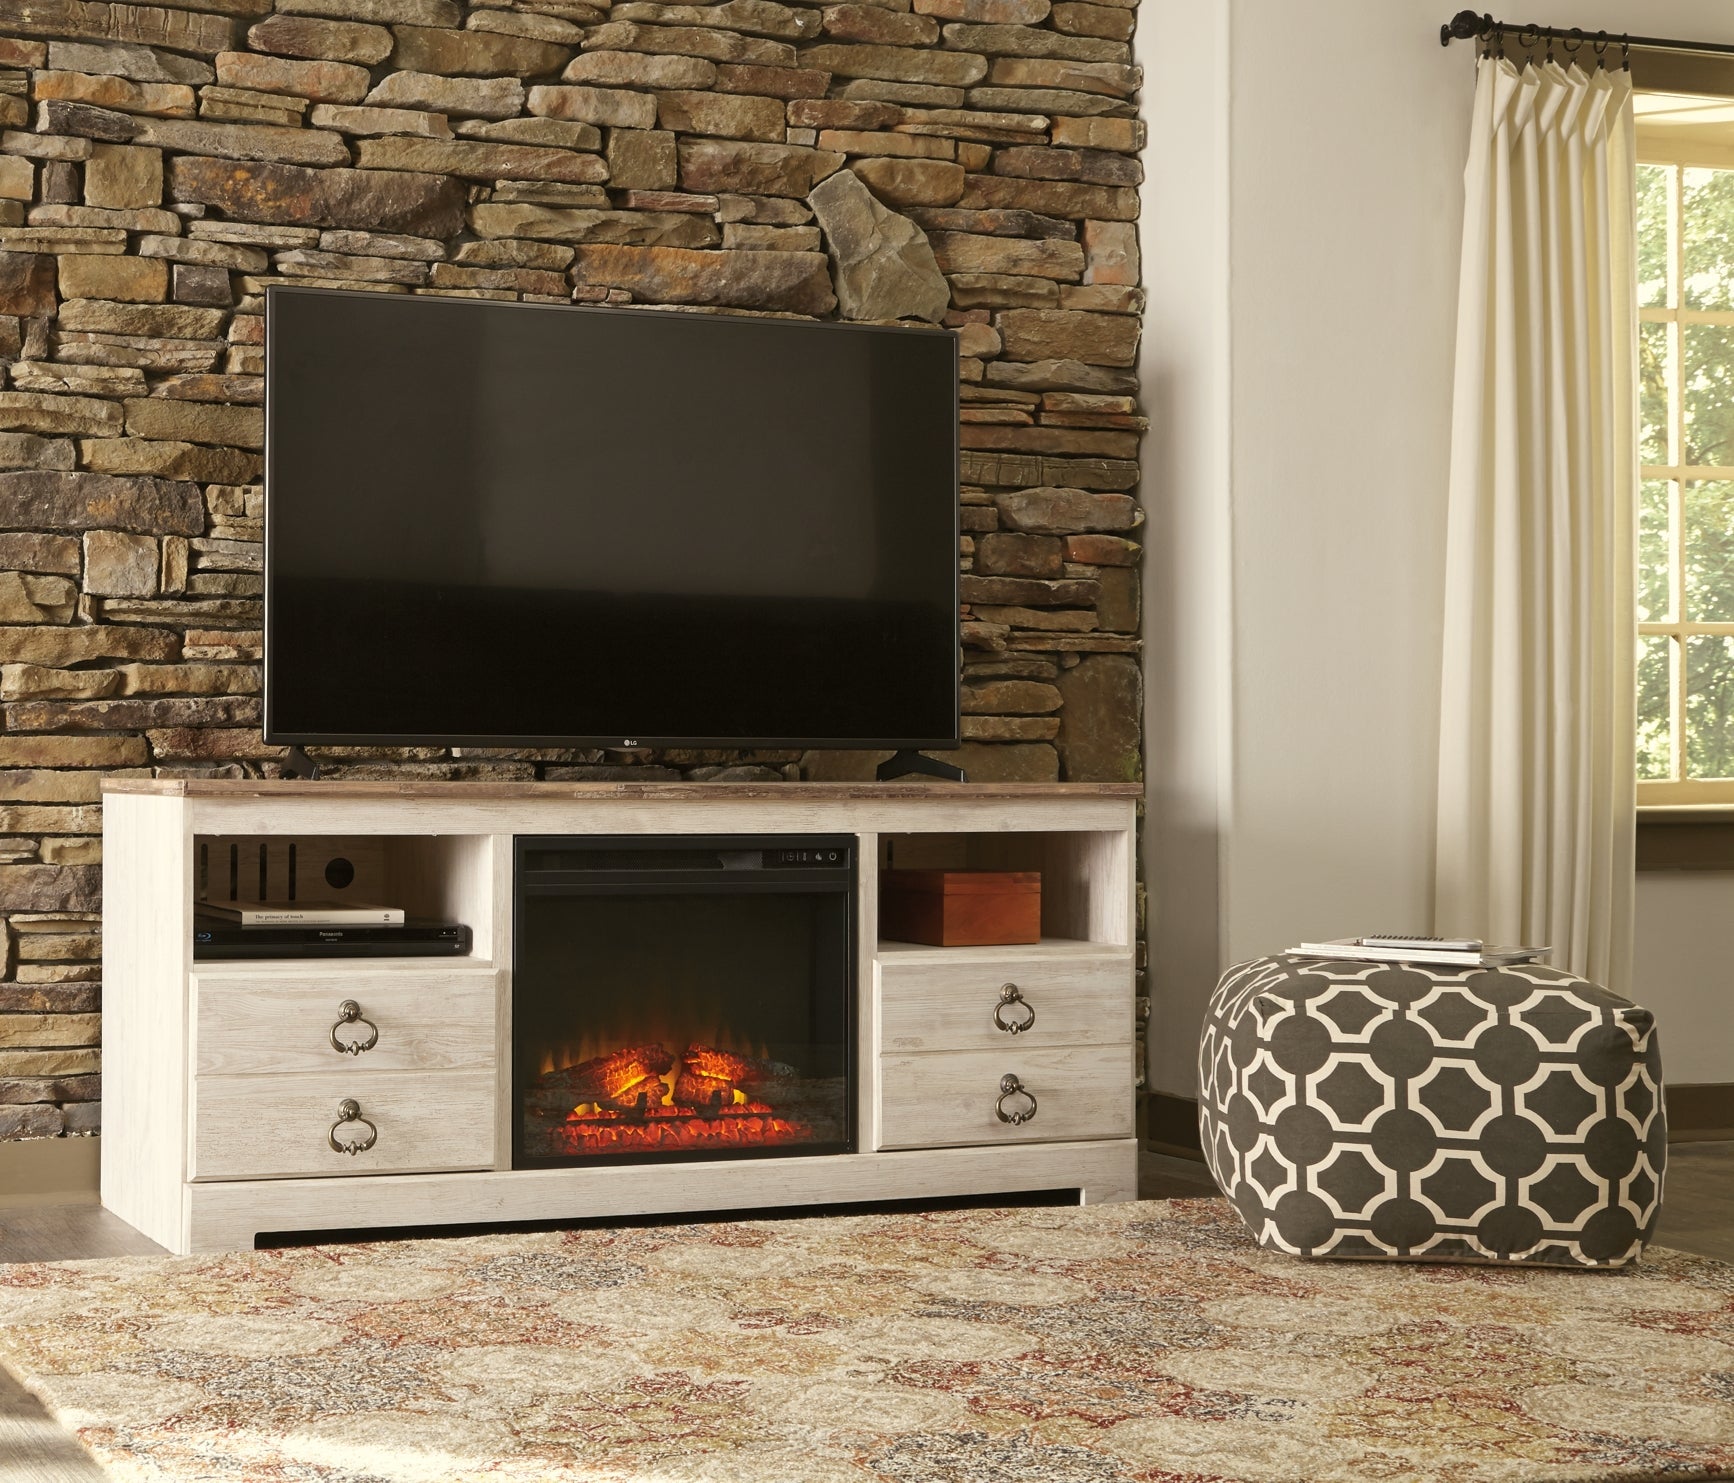 Willowton LG TV Stand w/Fireplace Option